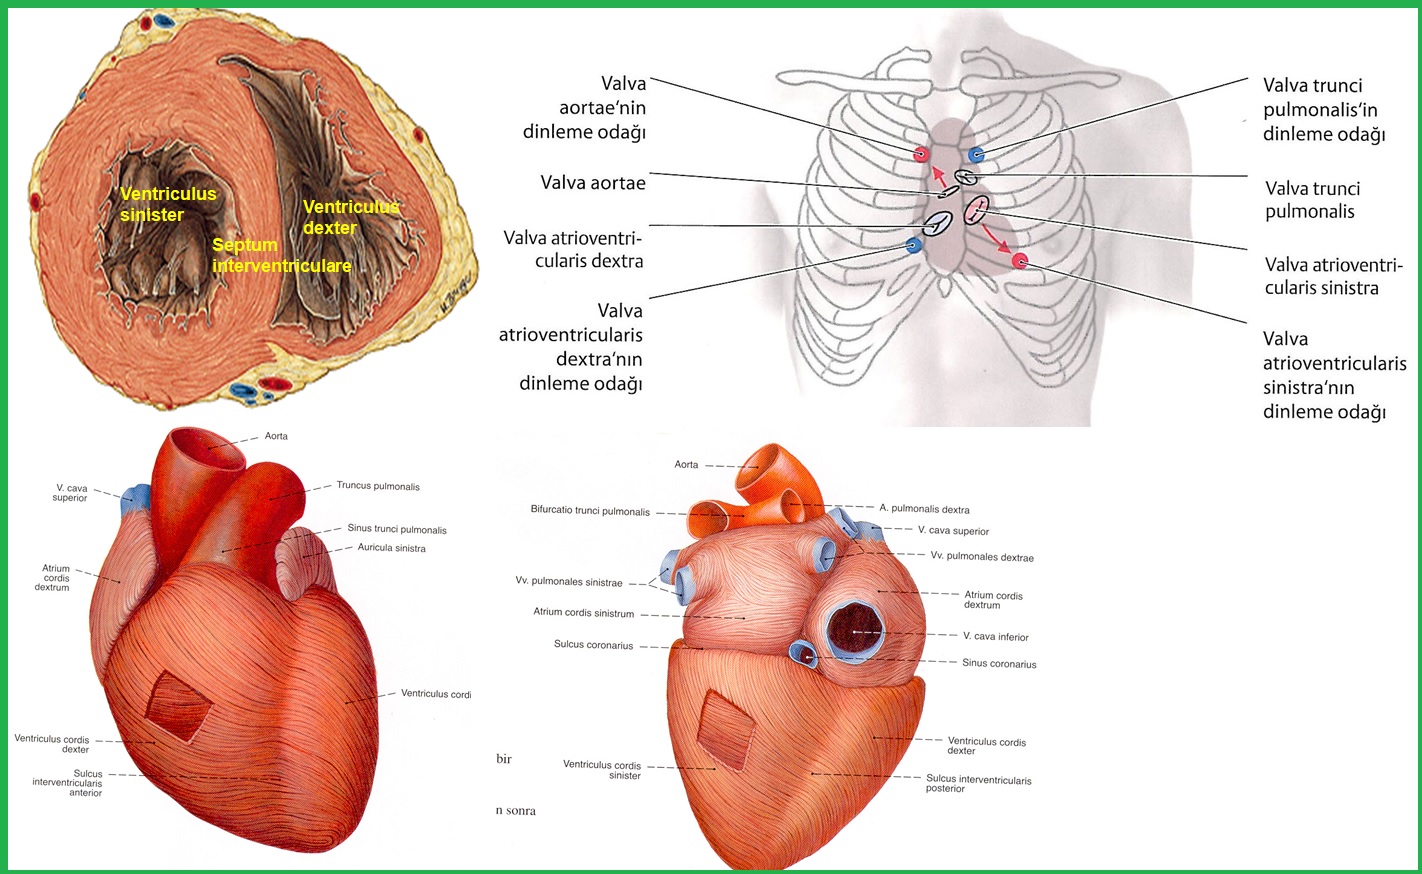 Cordis латынь. Строение сердца sulcus coronarius. Левый желудочек сердца (ventriculus Sinister):. Укажите створки valva atrioventricularis sinistra.